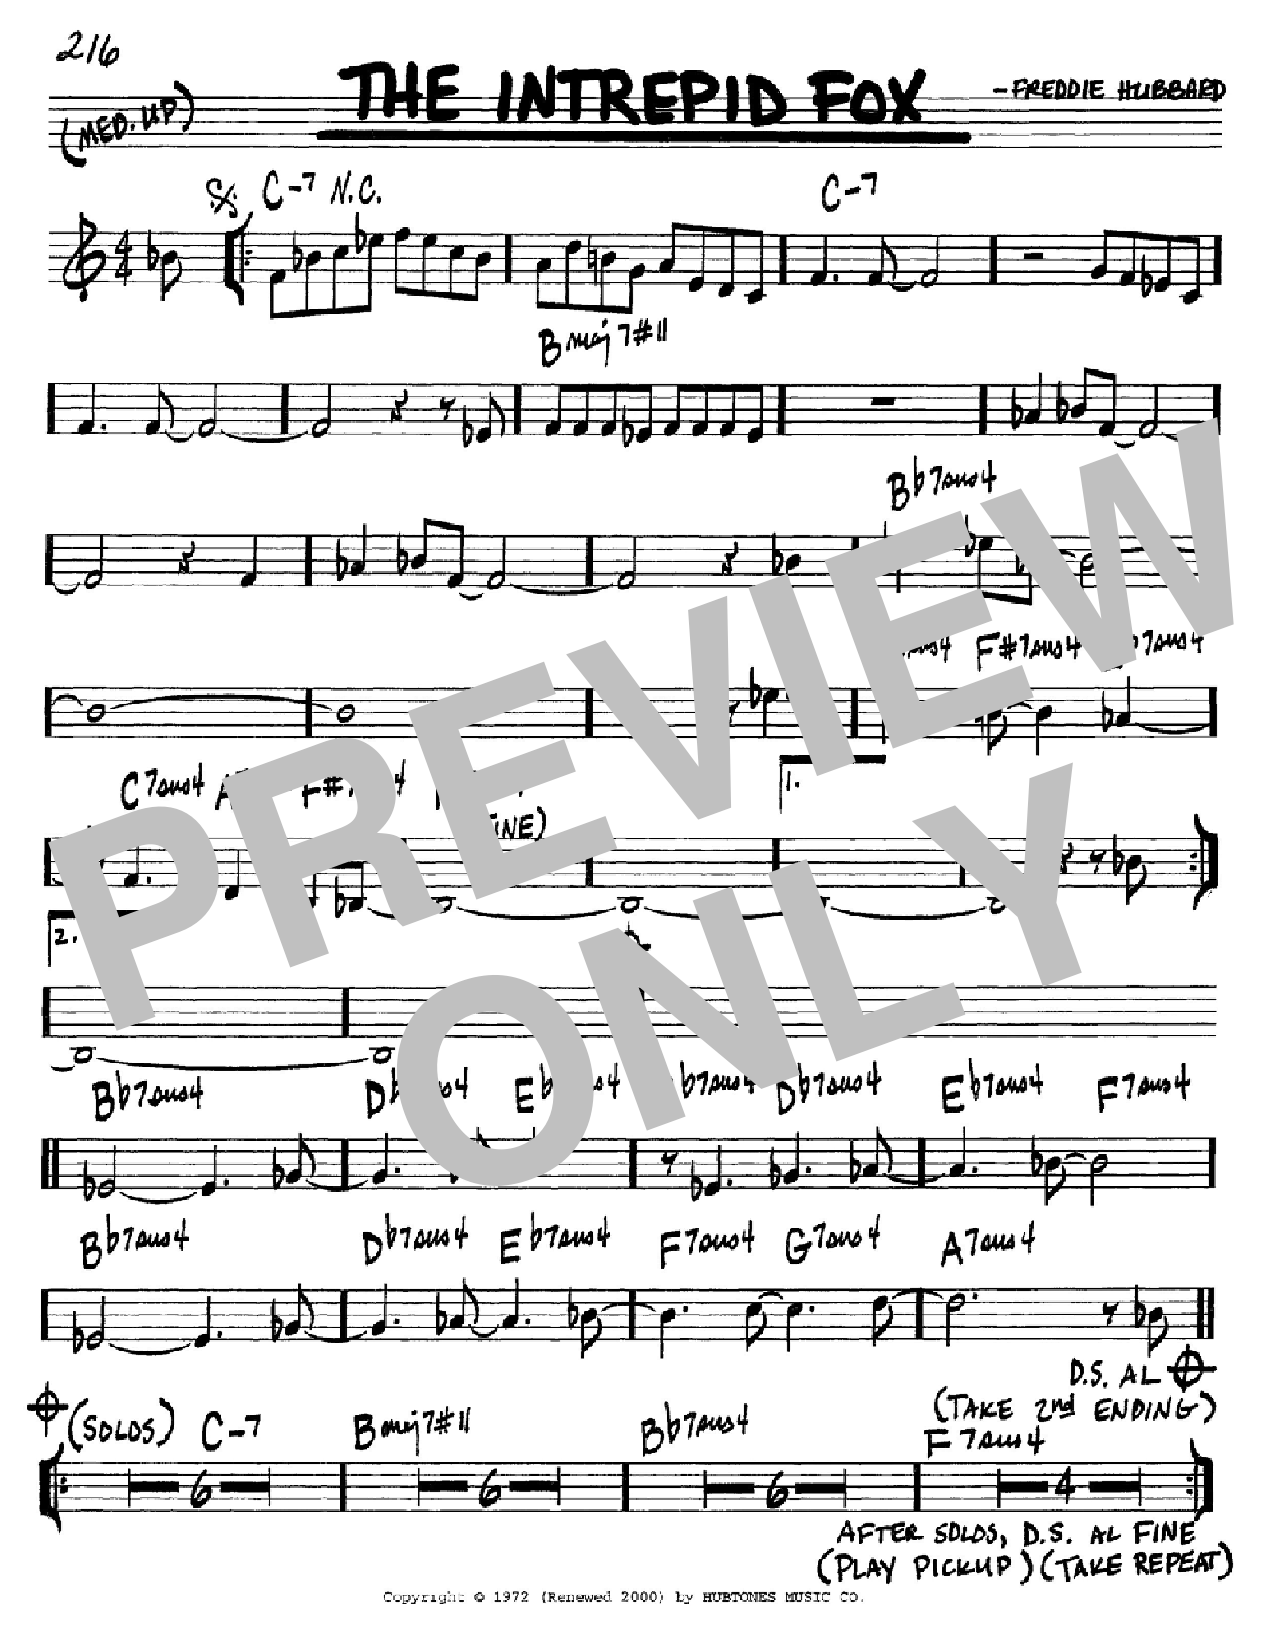 Download Freddie Hubbard The Intrepid Fox Sheet Music